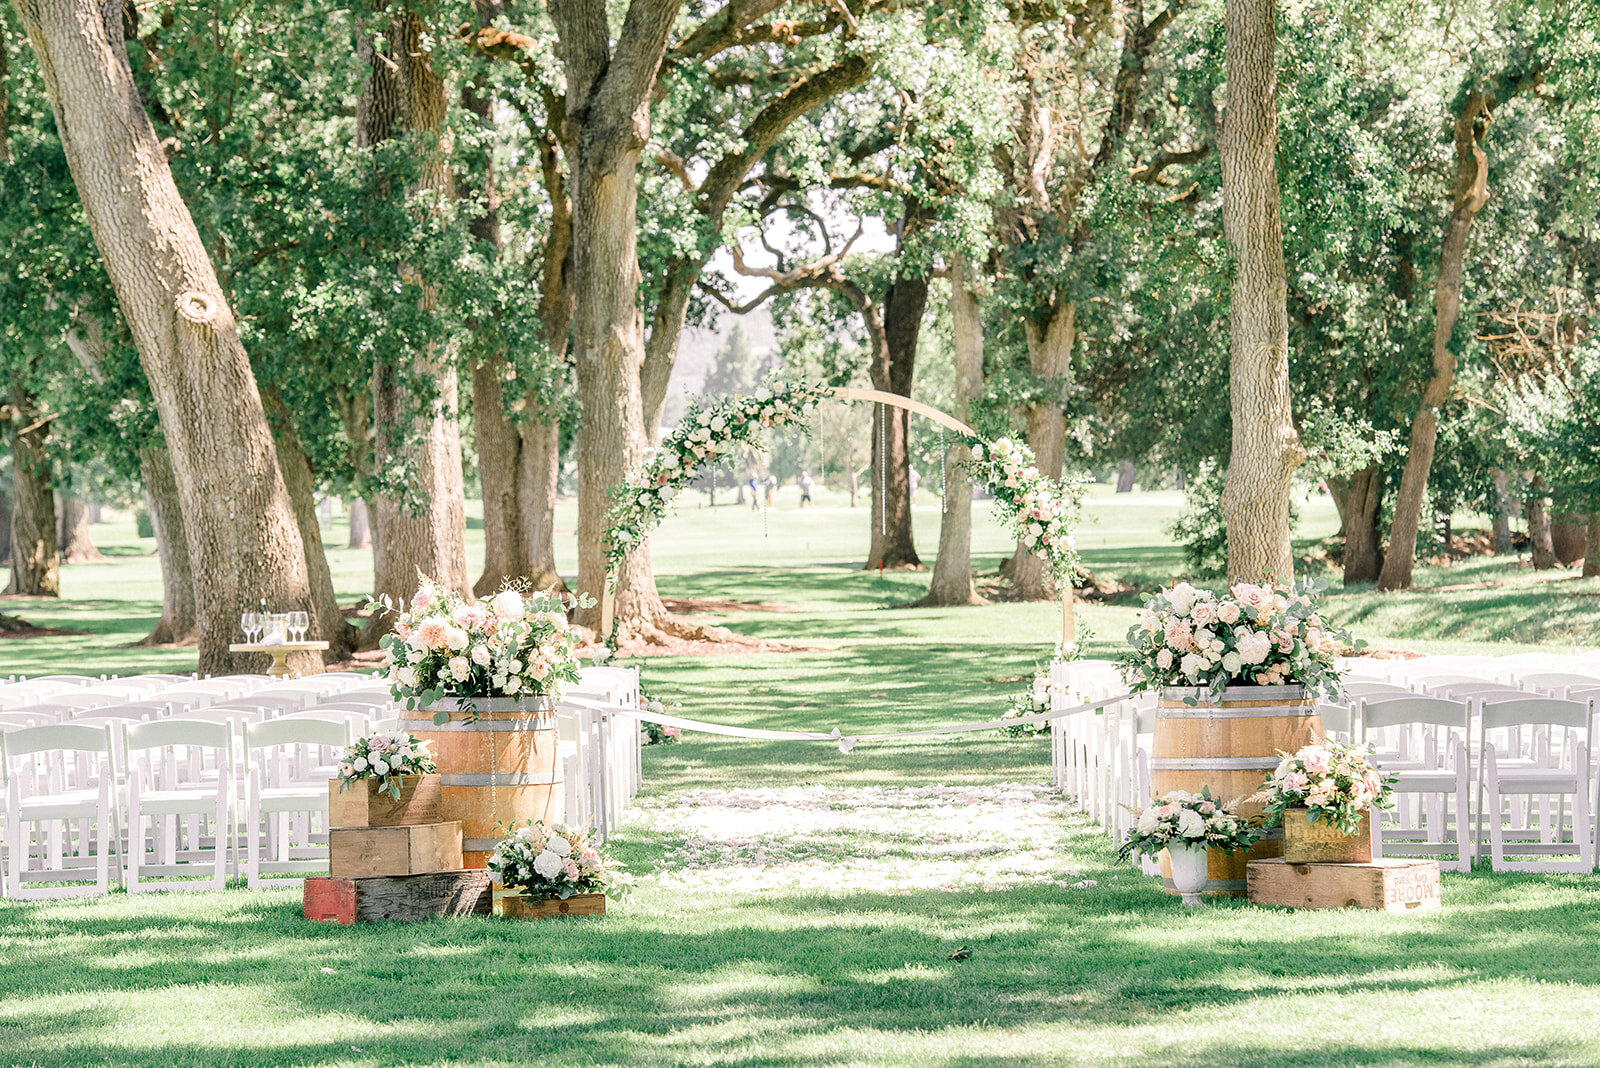 Violette-fleurs-roseville-napa-california-luxury-florist-silverado-resort-and-spa- weddings-by-scott-and-dana-upscale-ceremony-golf-course-wedding-design.jpg